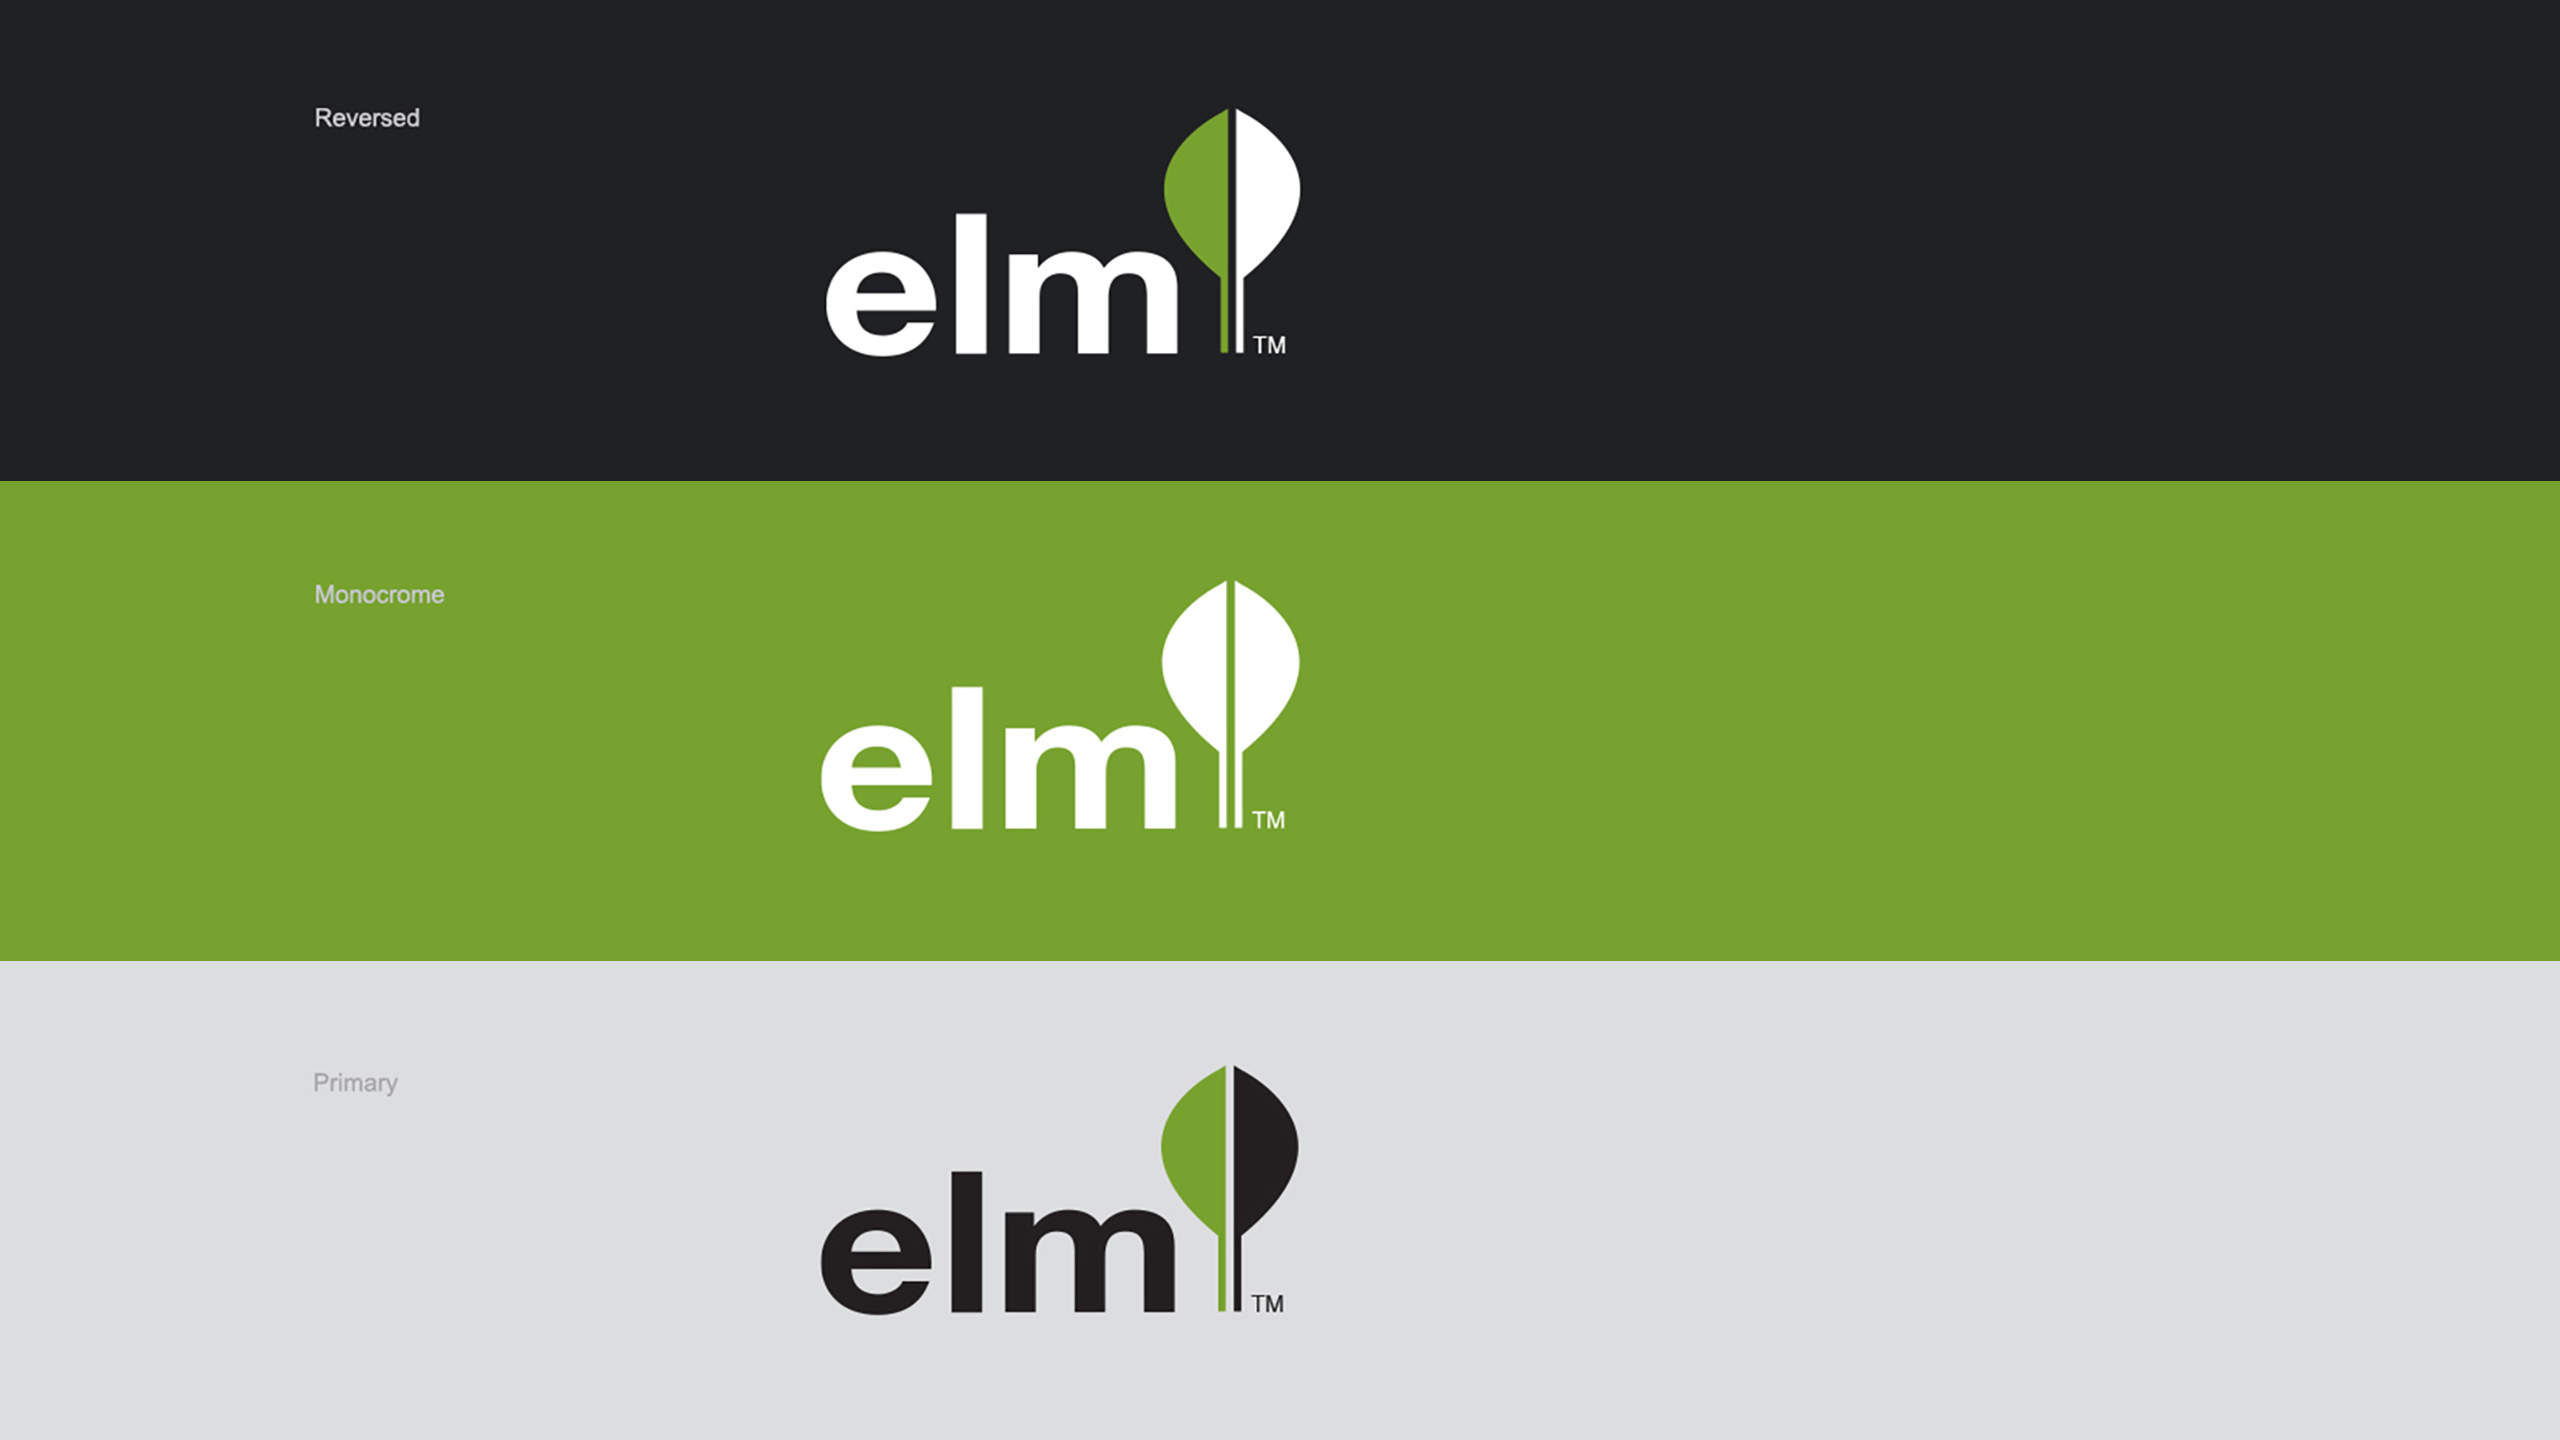 elm2nd-image1-new